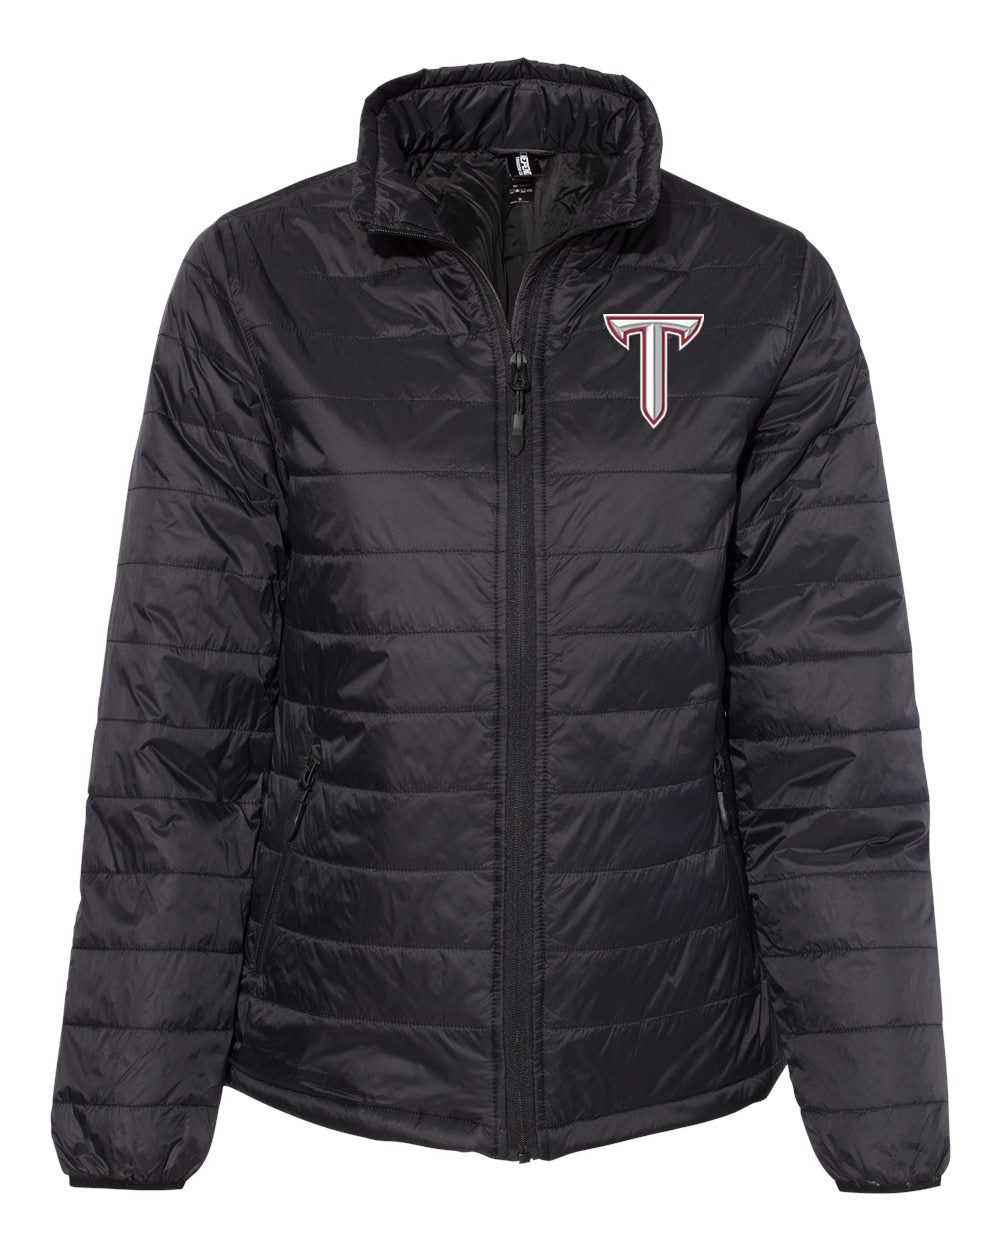 Temple University Puffer Jacket